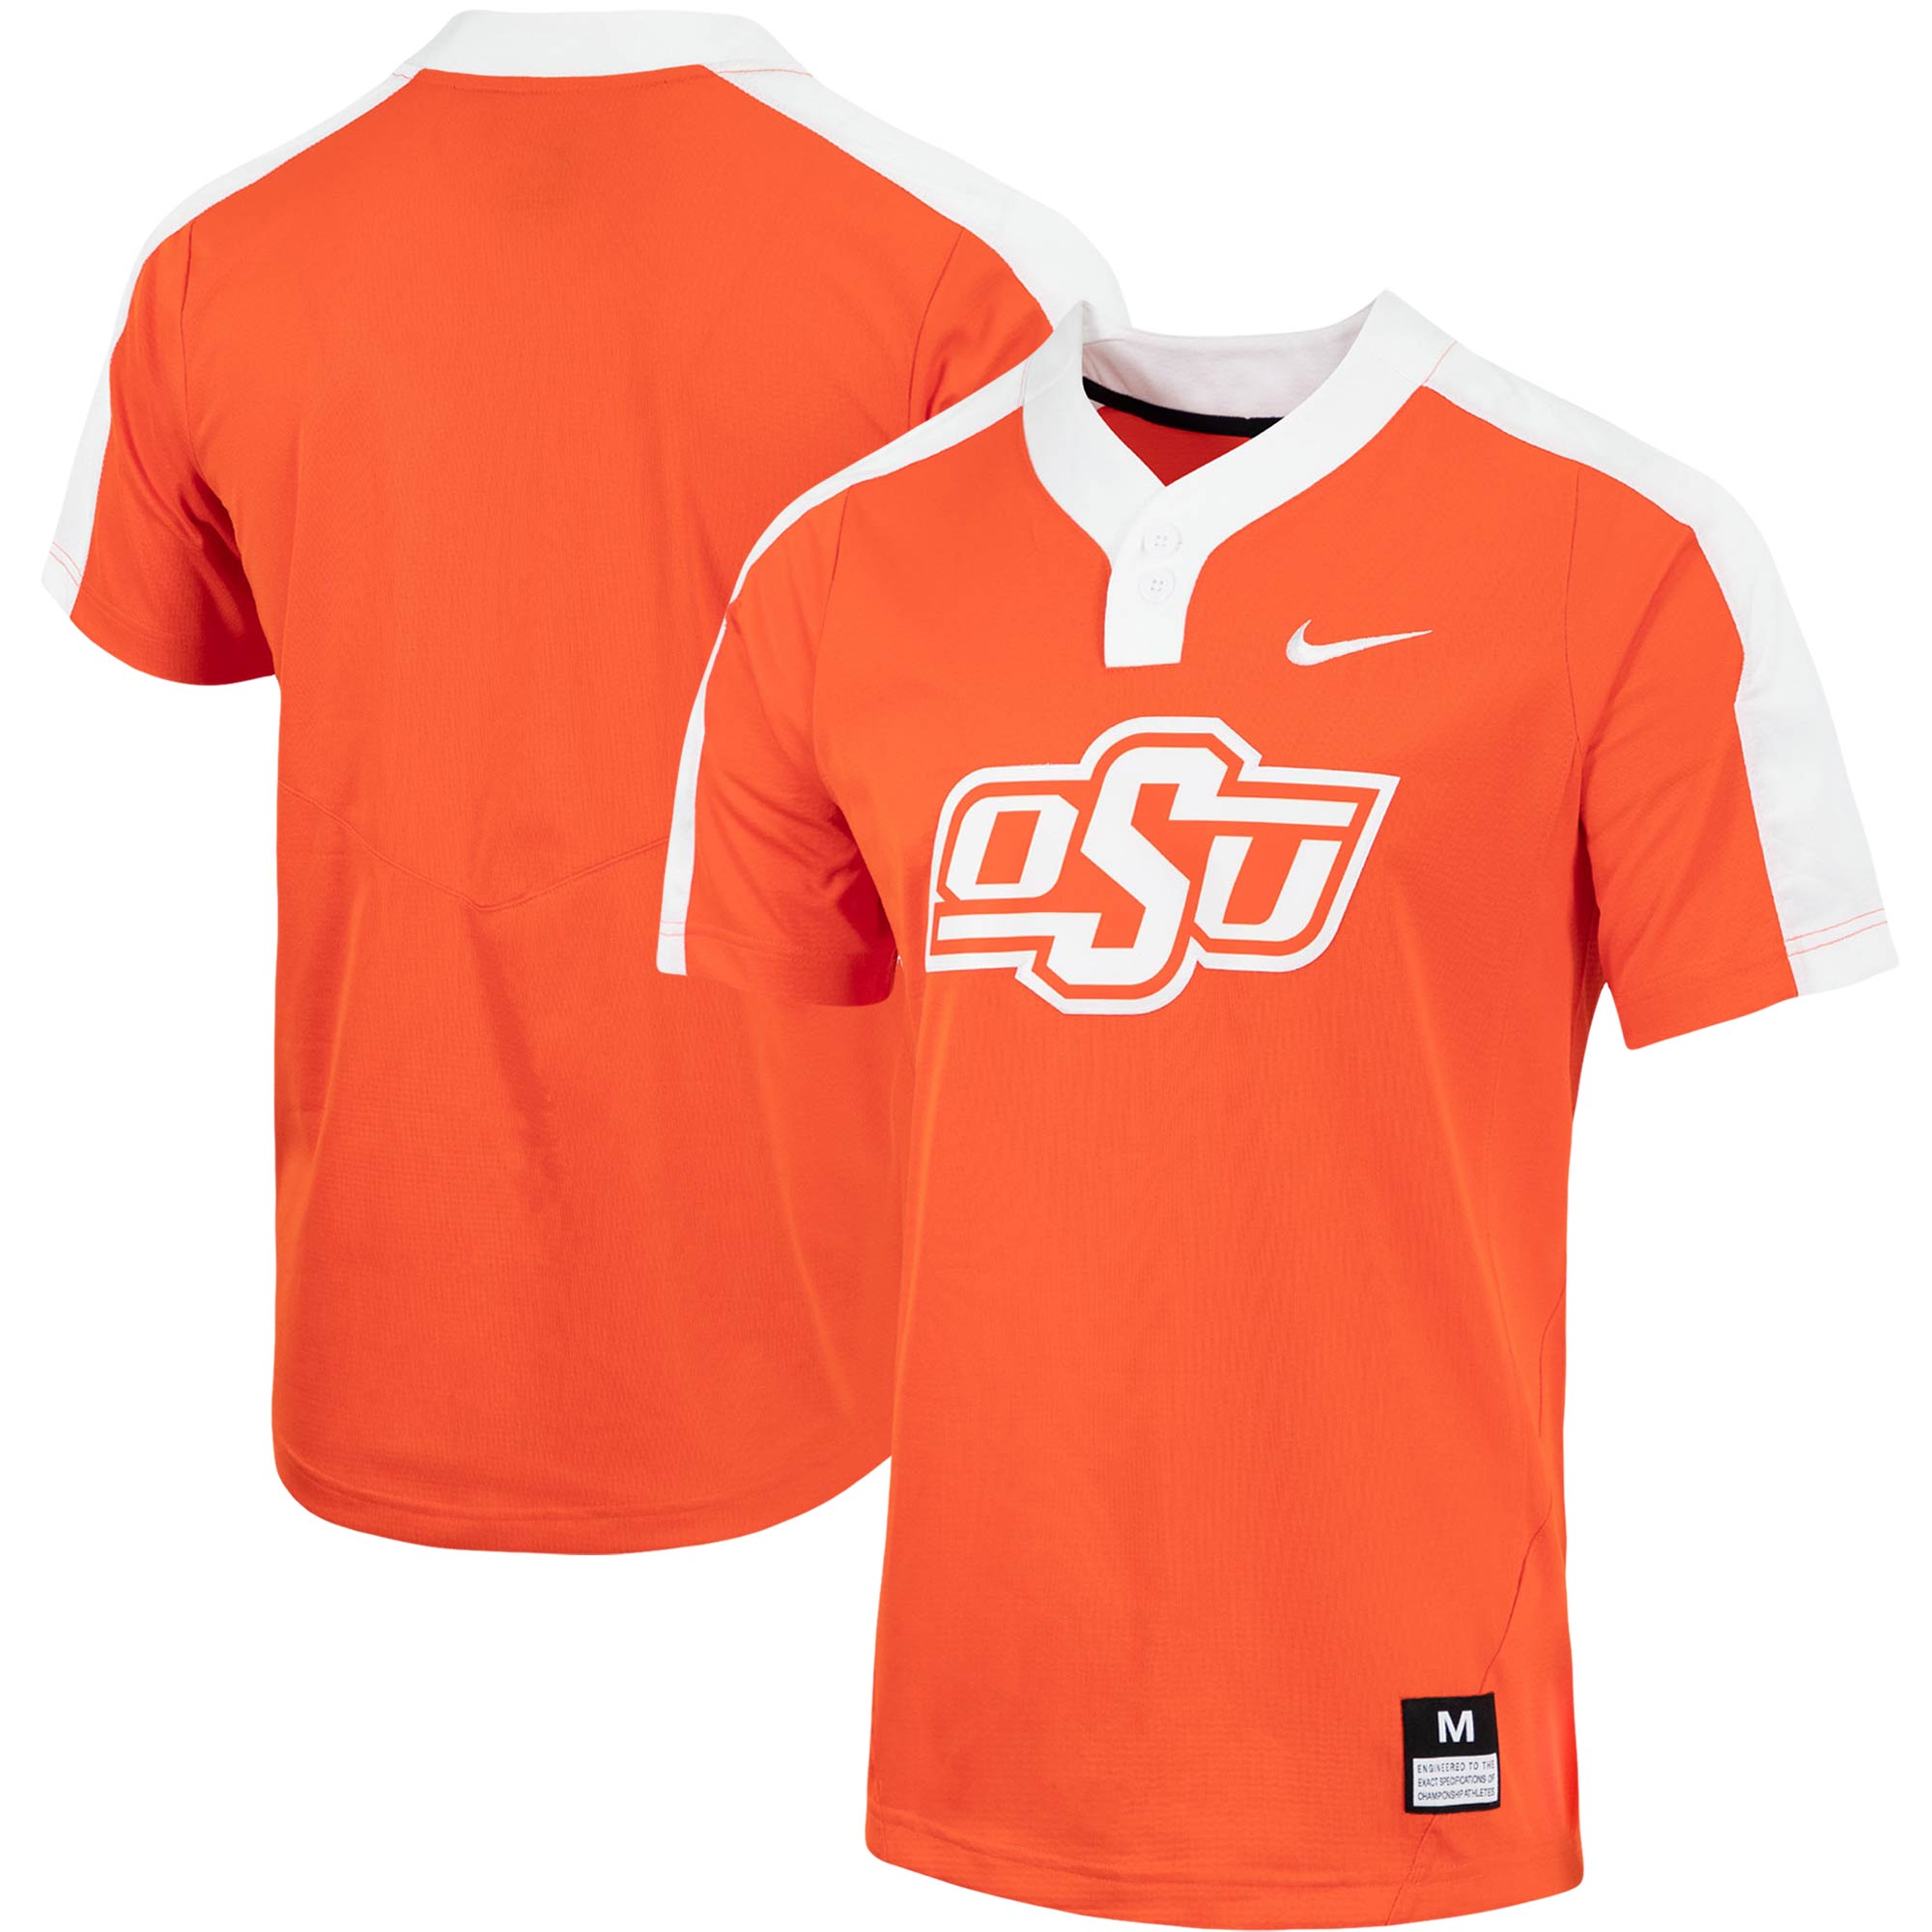 Oklahoma State Cowgirls Replica 2-Button Softball Jersey - Orange For Youth Women Men